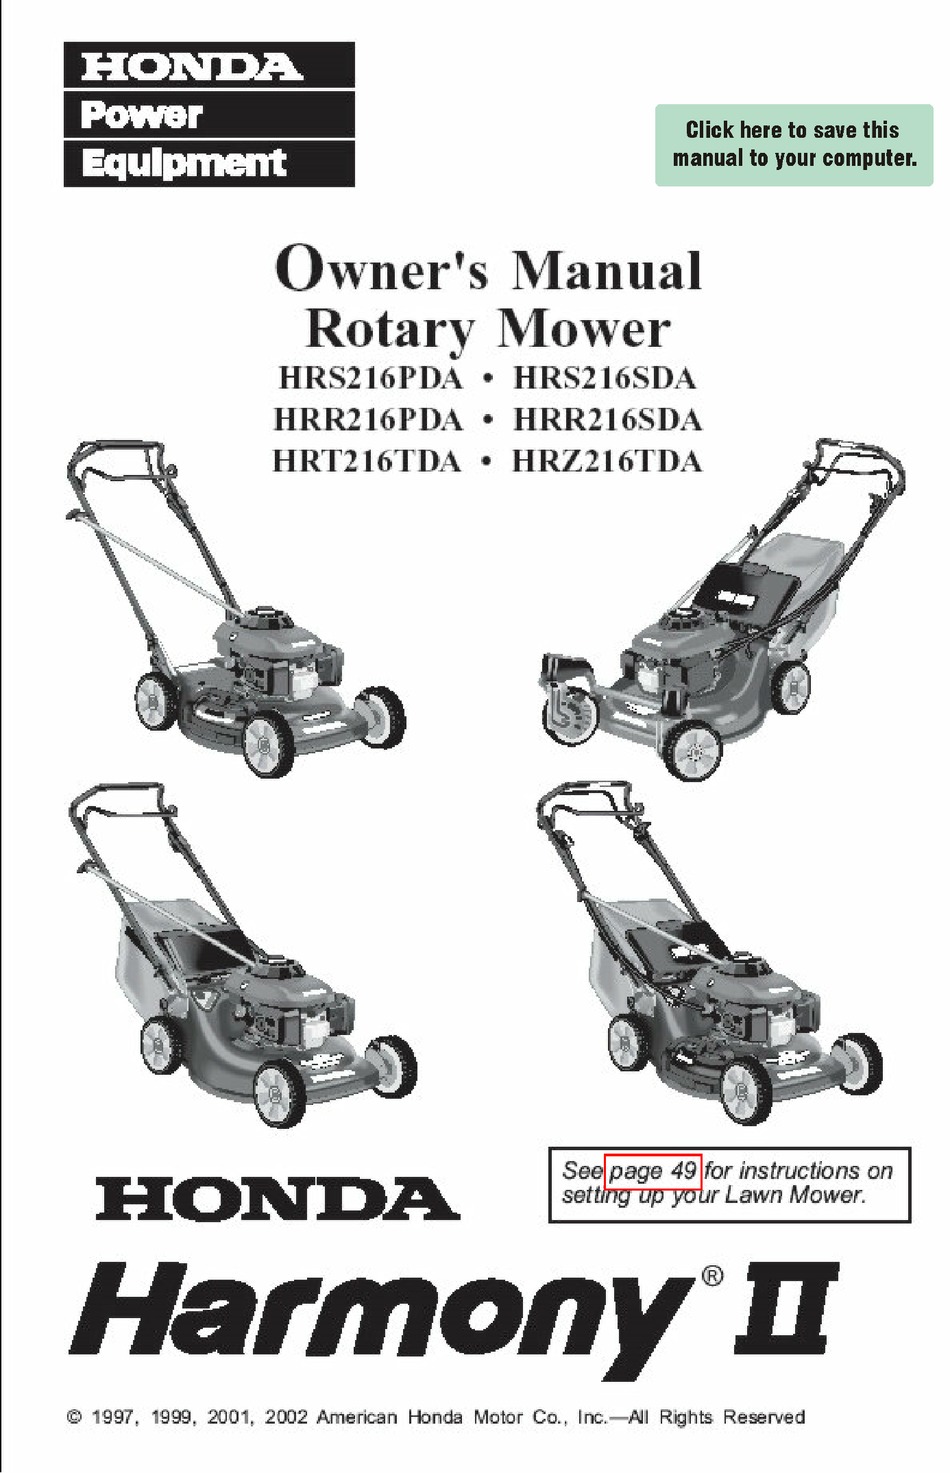 HONDA HRT216TDA HARMONY II OWNER'S MANUAL Pdf Download | ManualsLib